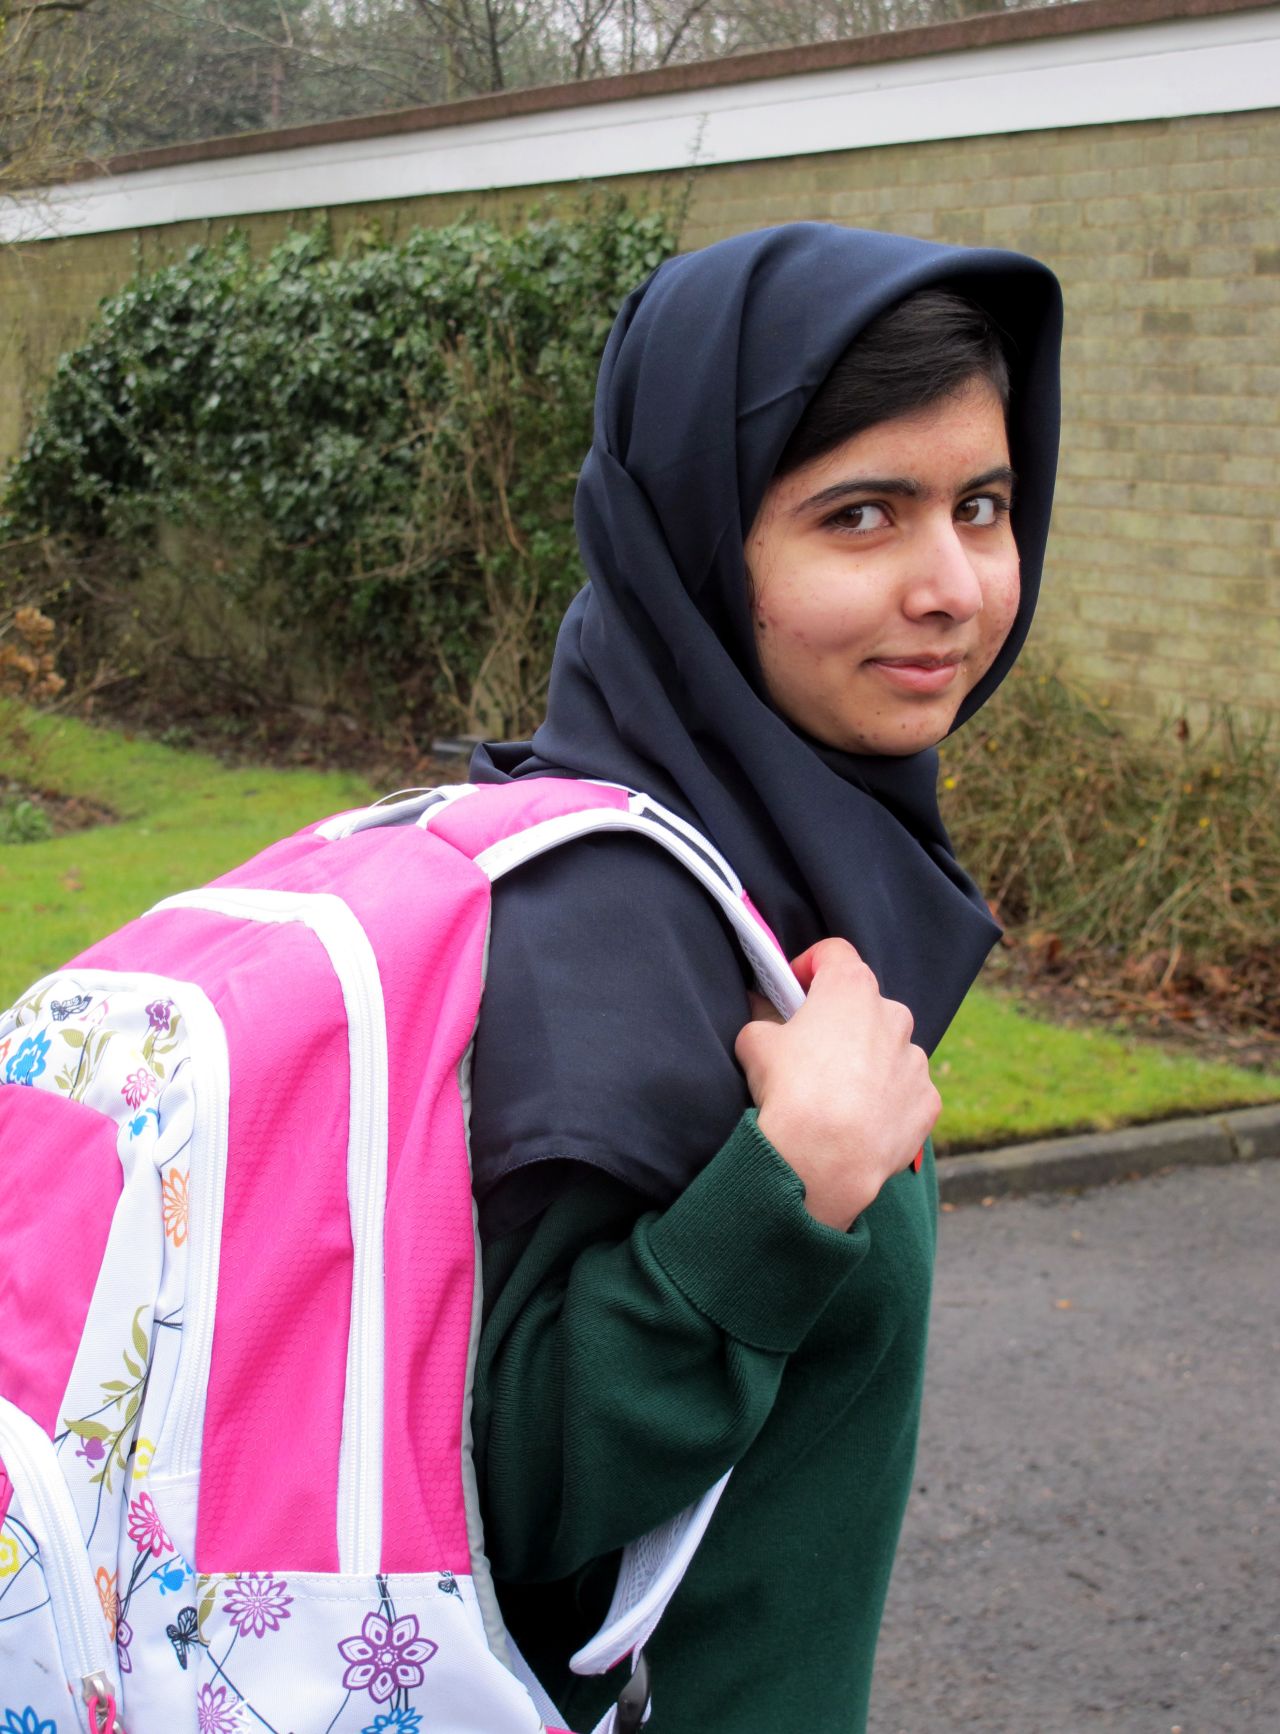 Malala returns to school at Edgbaston High School for Girls in Birmingham, England, on March 19, 2013. She said she had "achieved her dream."